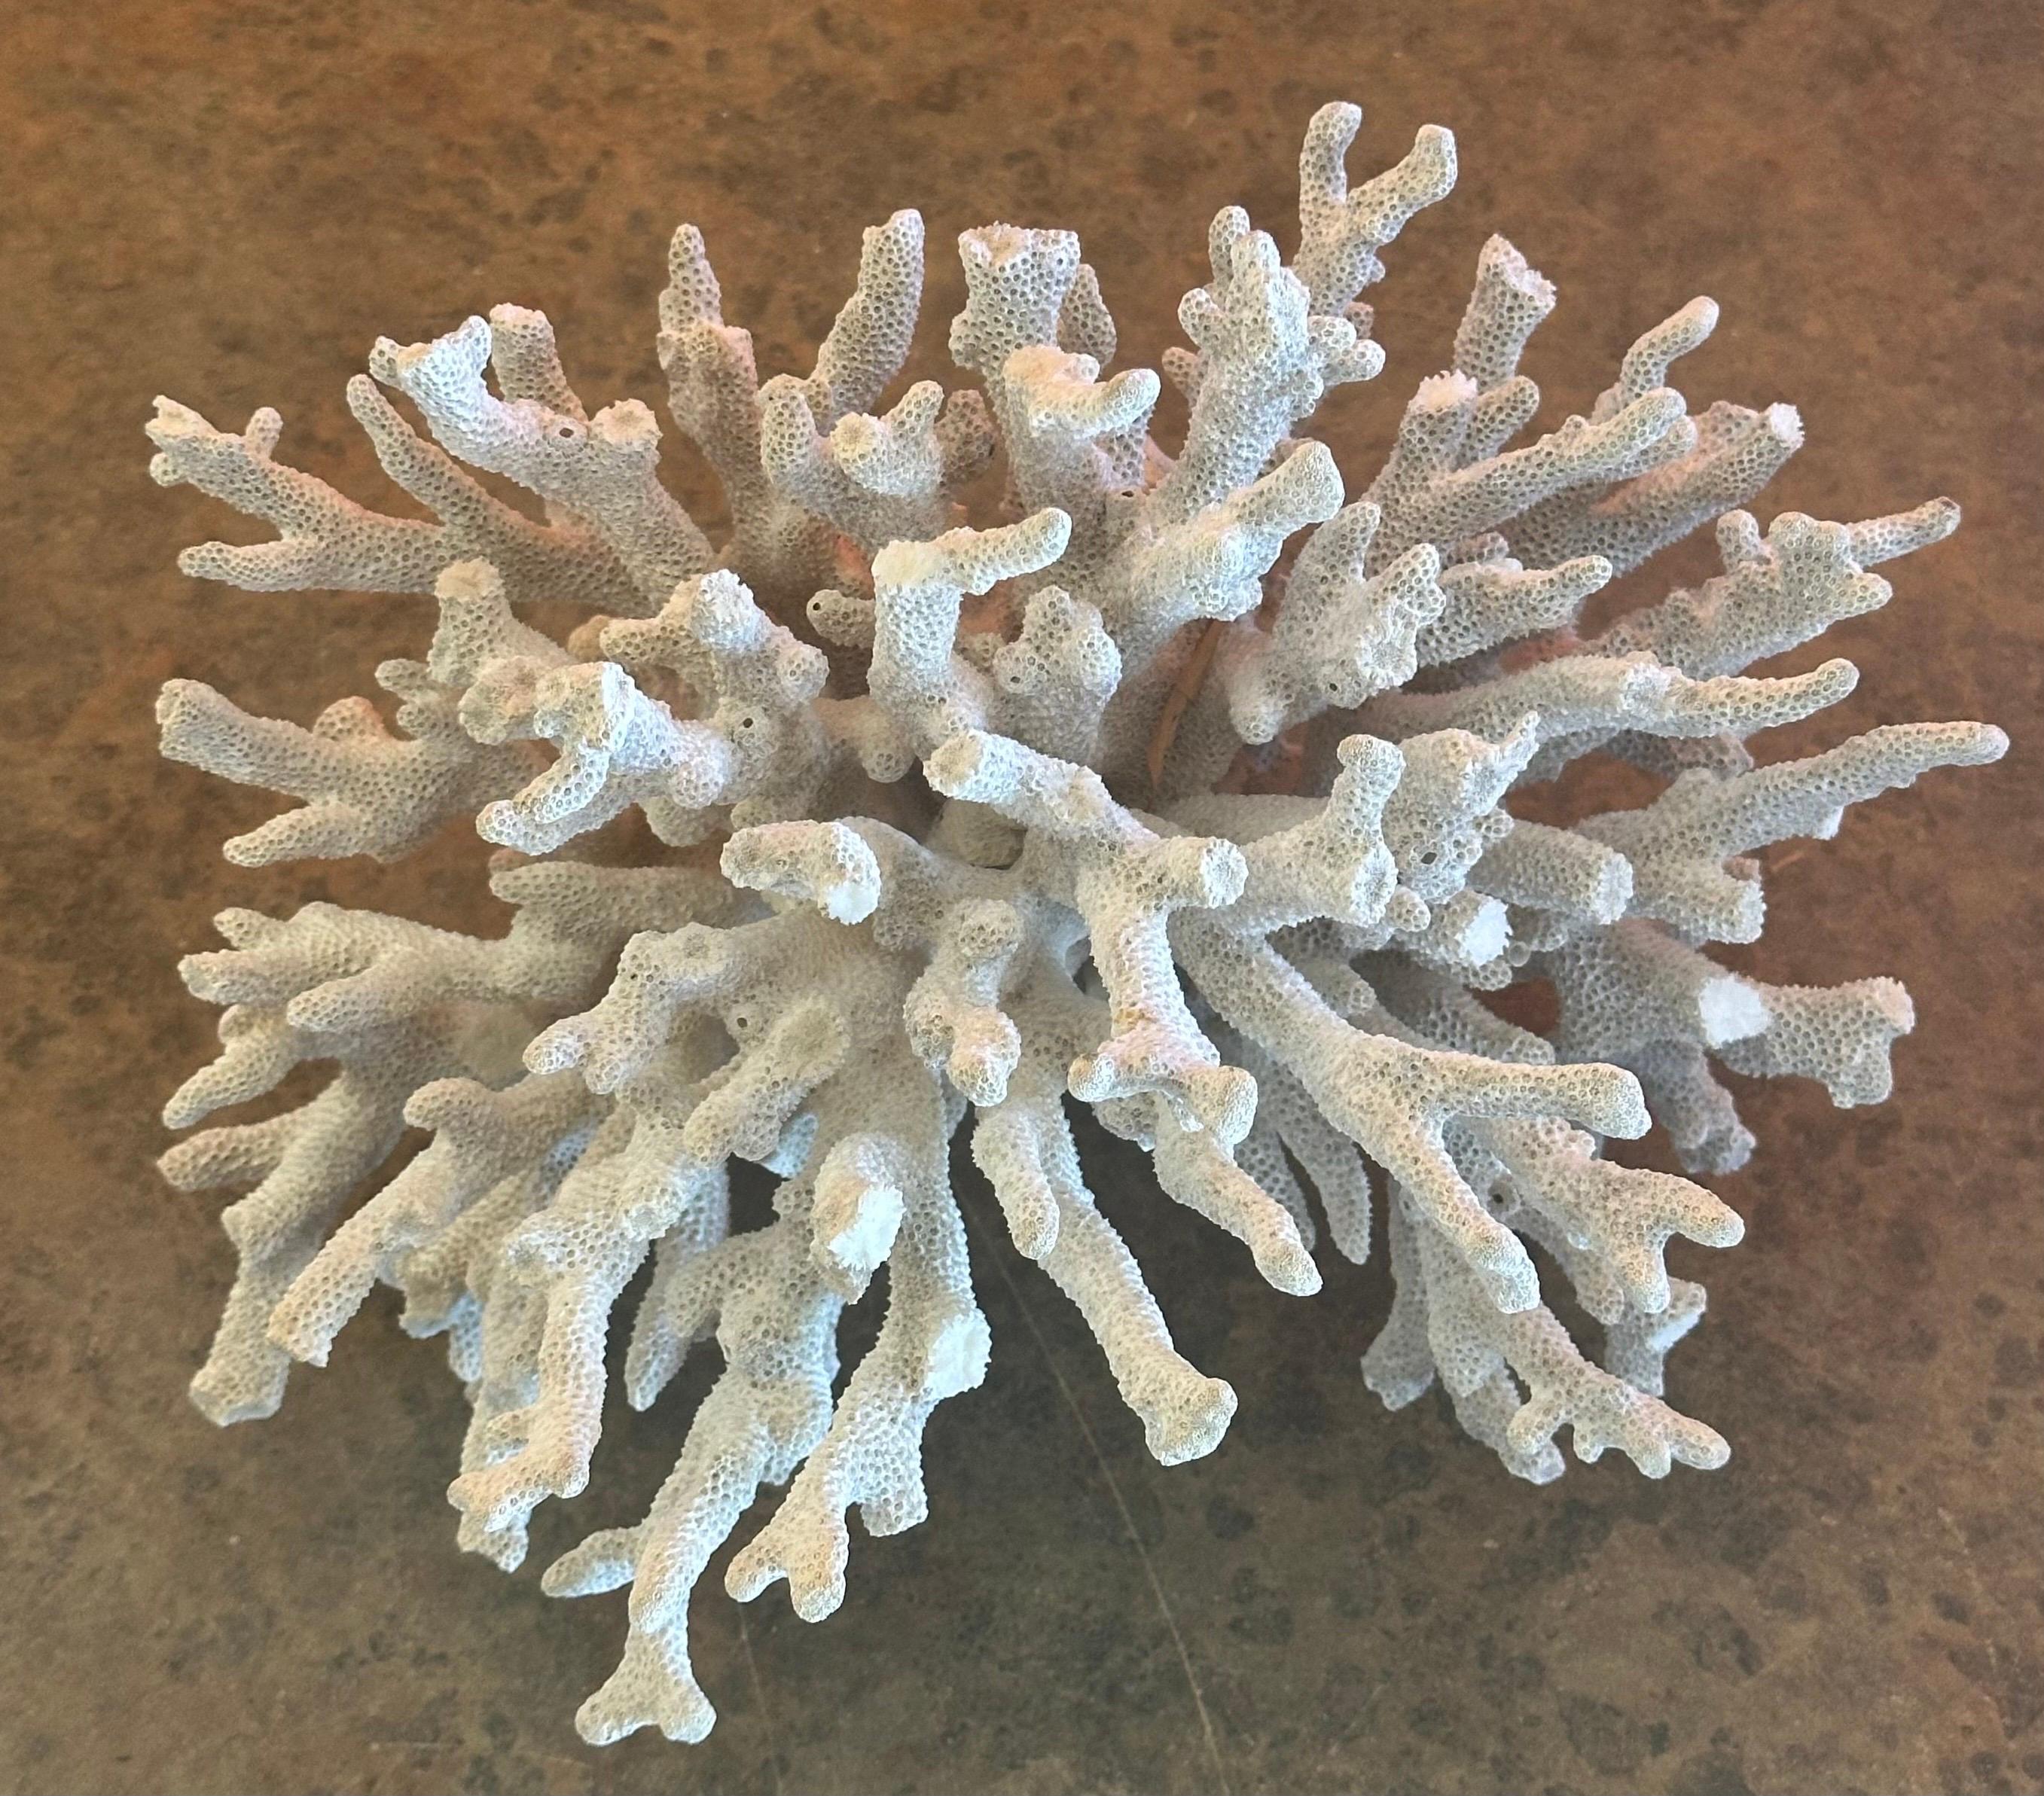 American Large Natural White Sea Coral Specimen For Sale